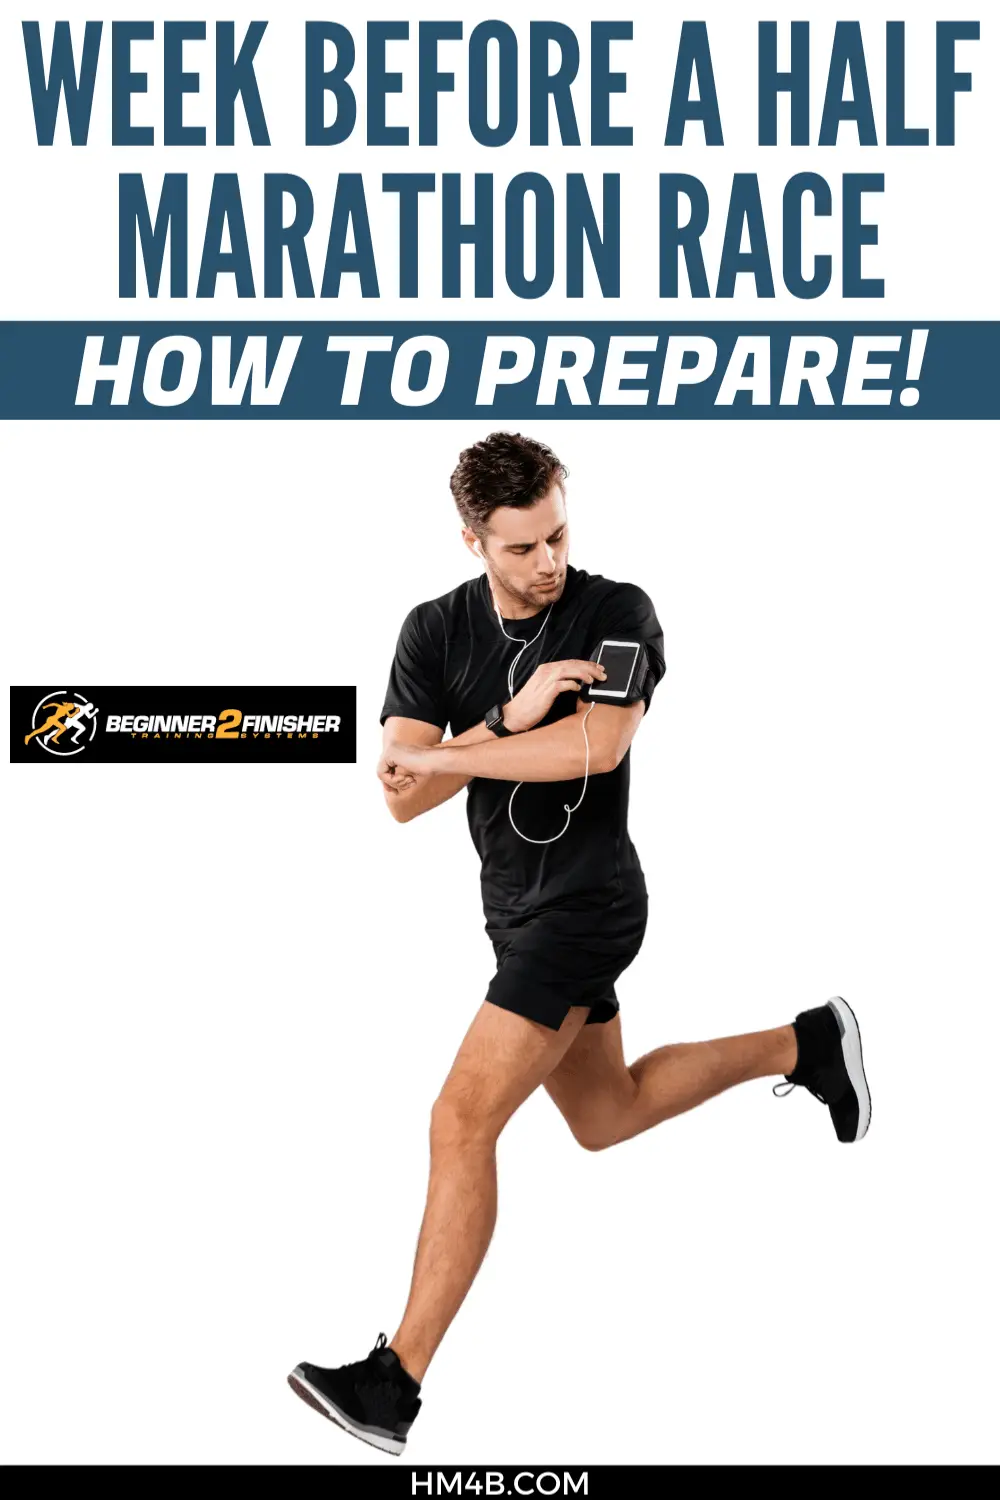 Week Before A Half Marathon Race - How to Prepare!